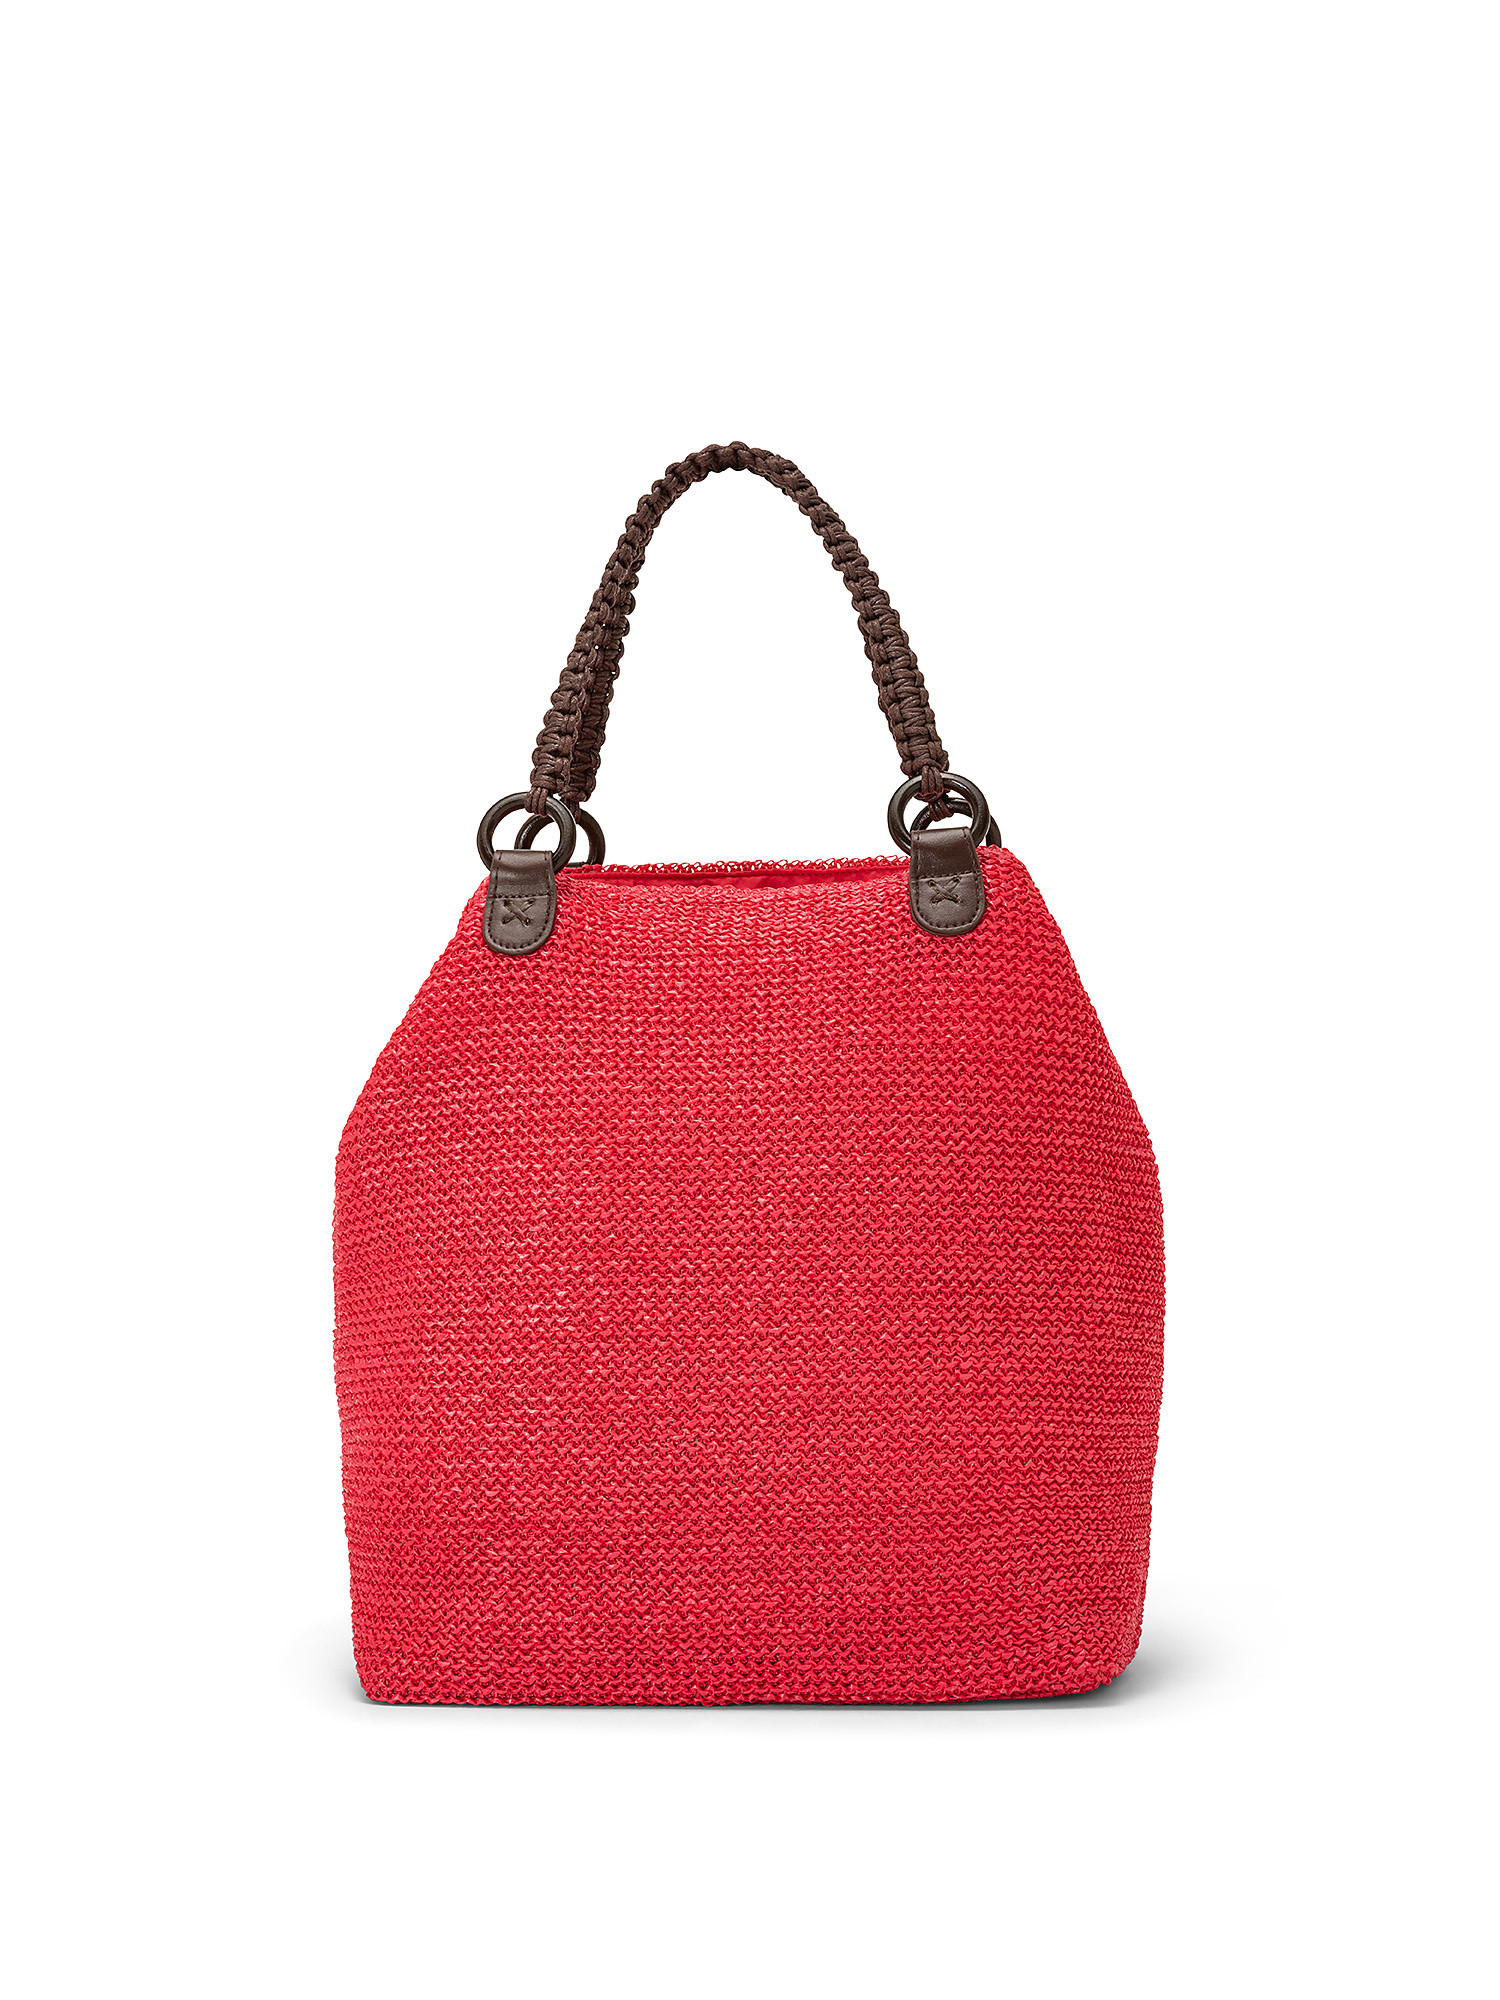 Shopping bag effetto paglia, Rosso, large